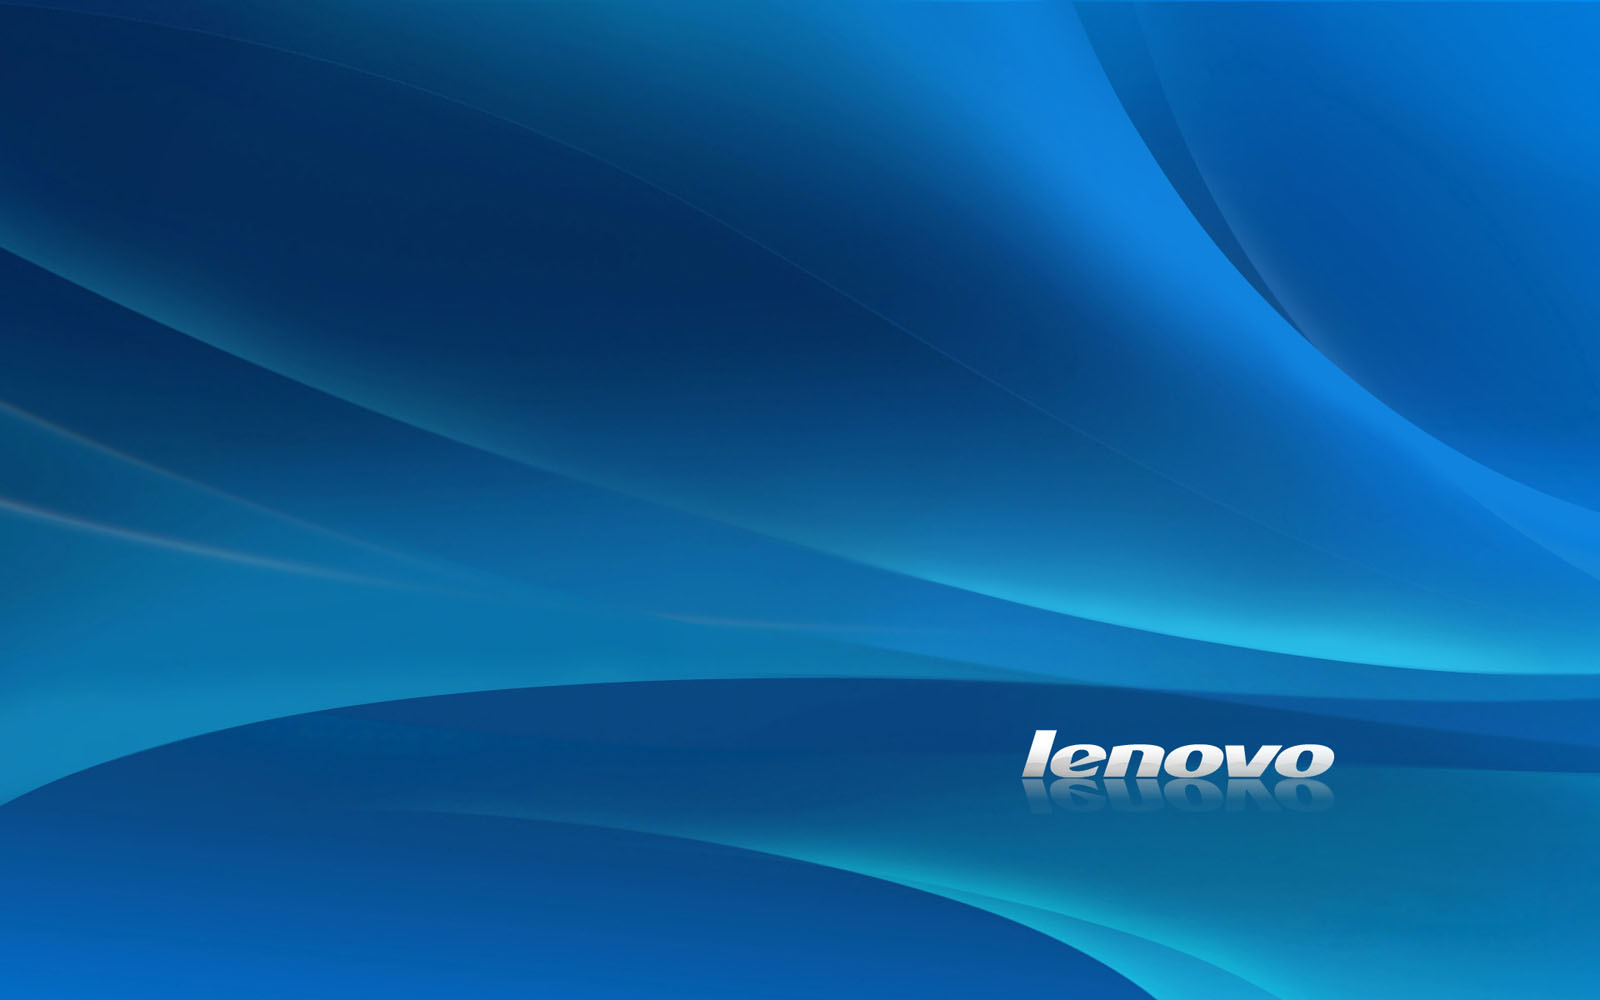  Lenovo Laptop Wallpapers Lenovo Laptop DesktopWallpapers Lenovo